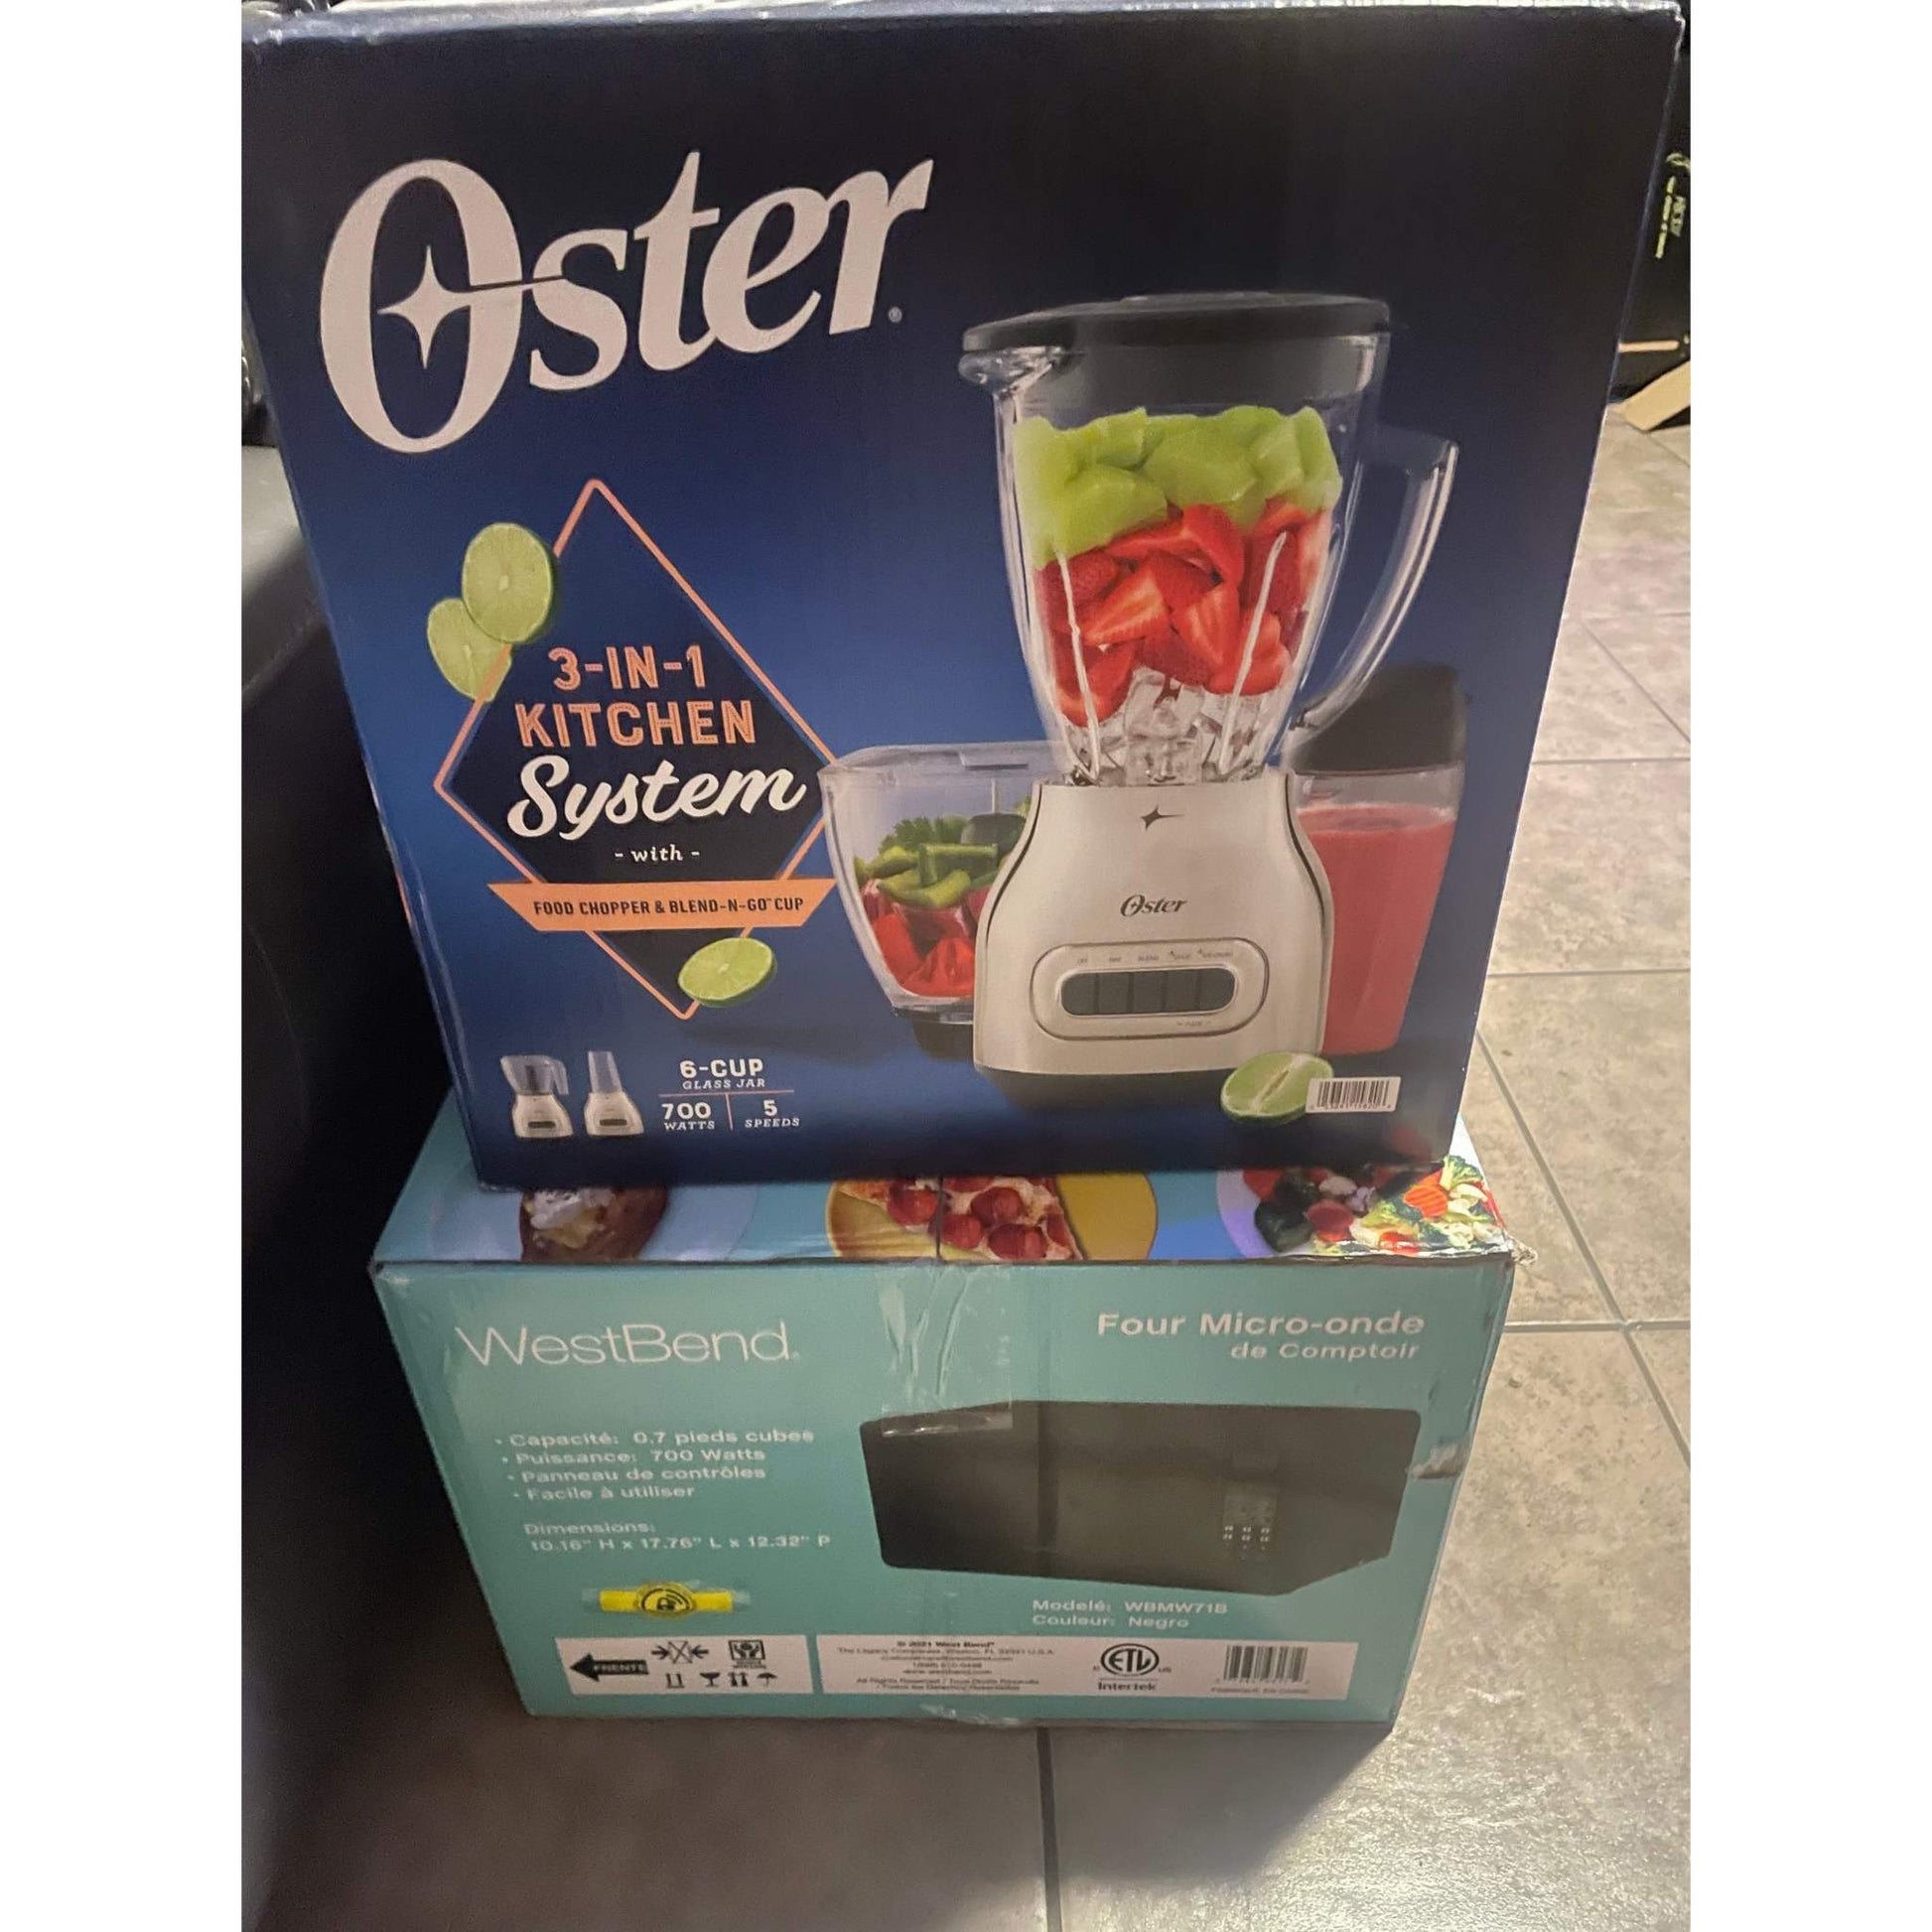 Oster 3-in-1 Kitchen System w/ Food Chopper & Blend n Go Cup NIB - Selzalot